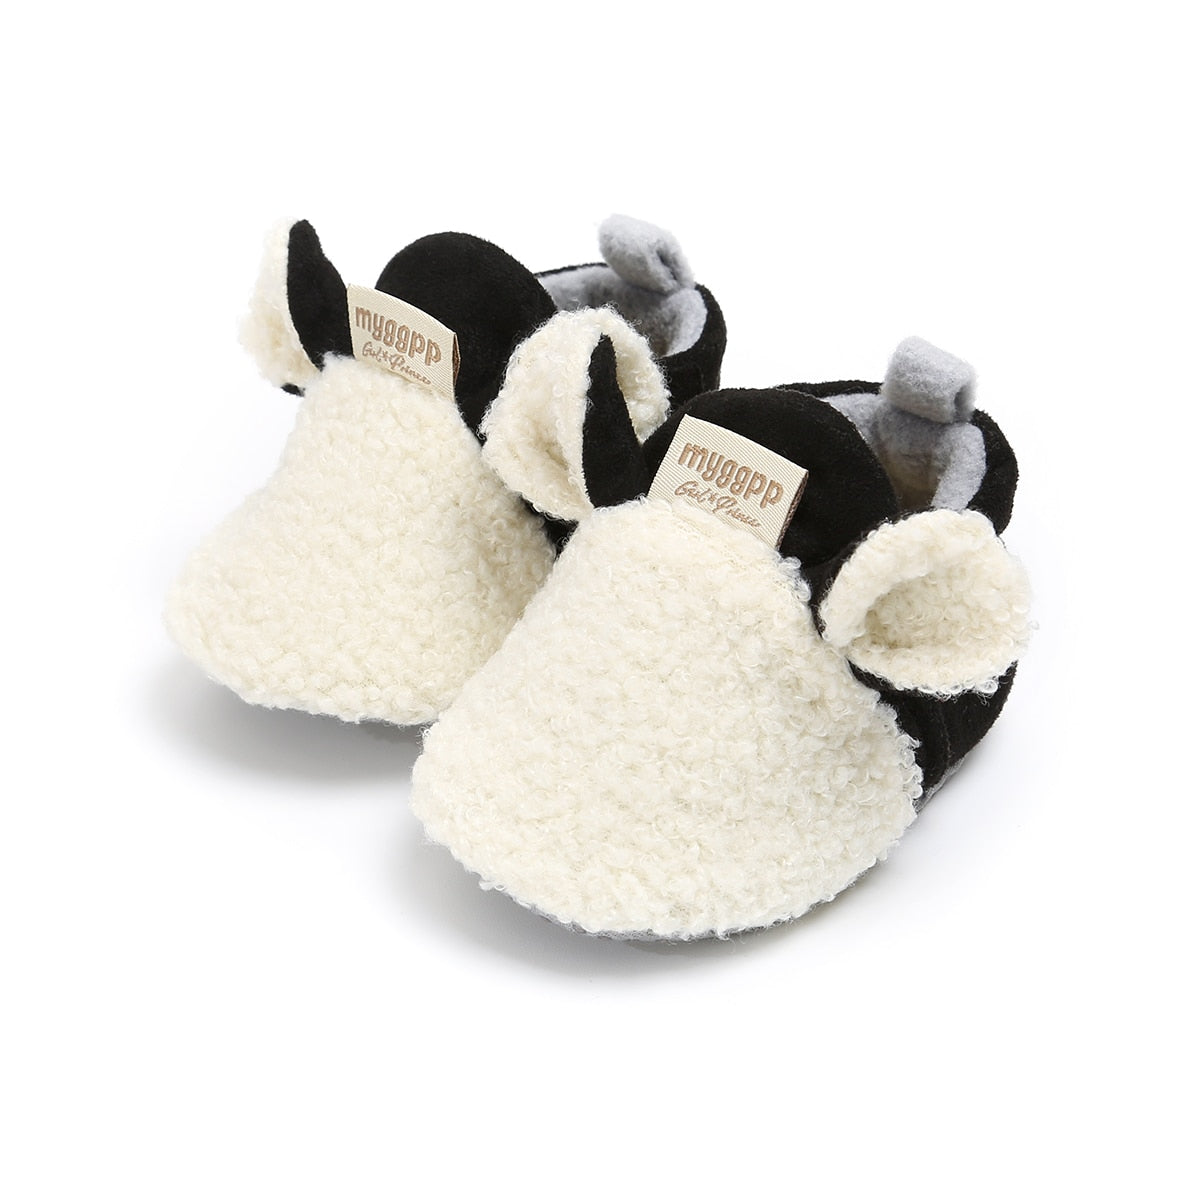 Sapato Bichinhos Fofos Sapato Loja Click Certo Branco 0-6 Meses 11cm 